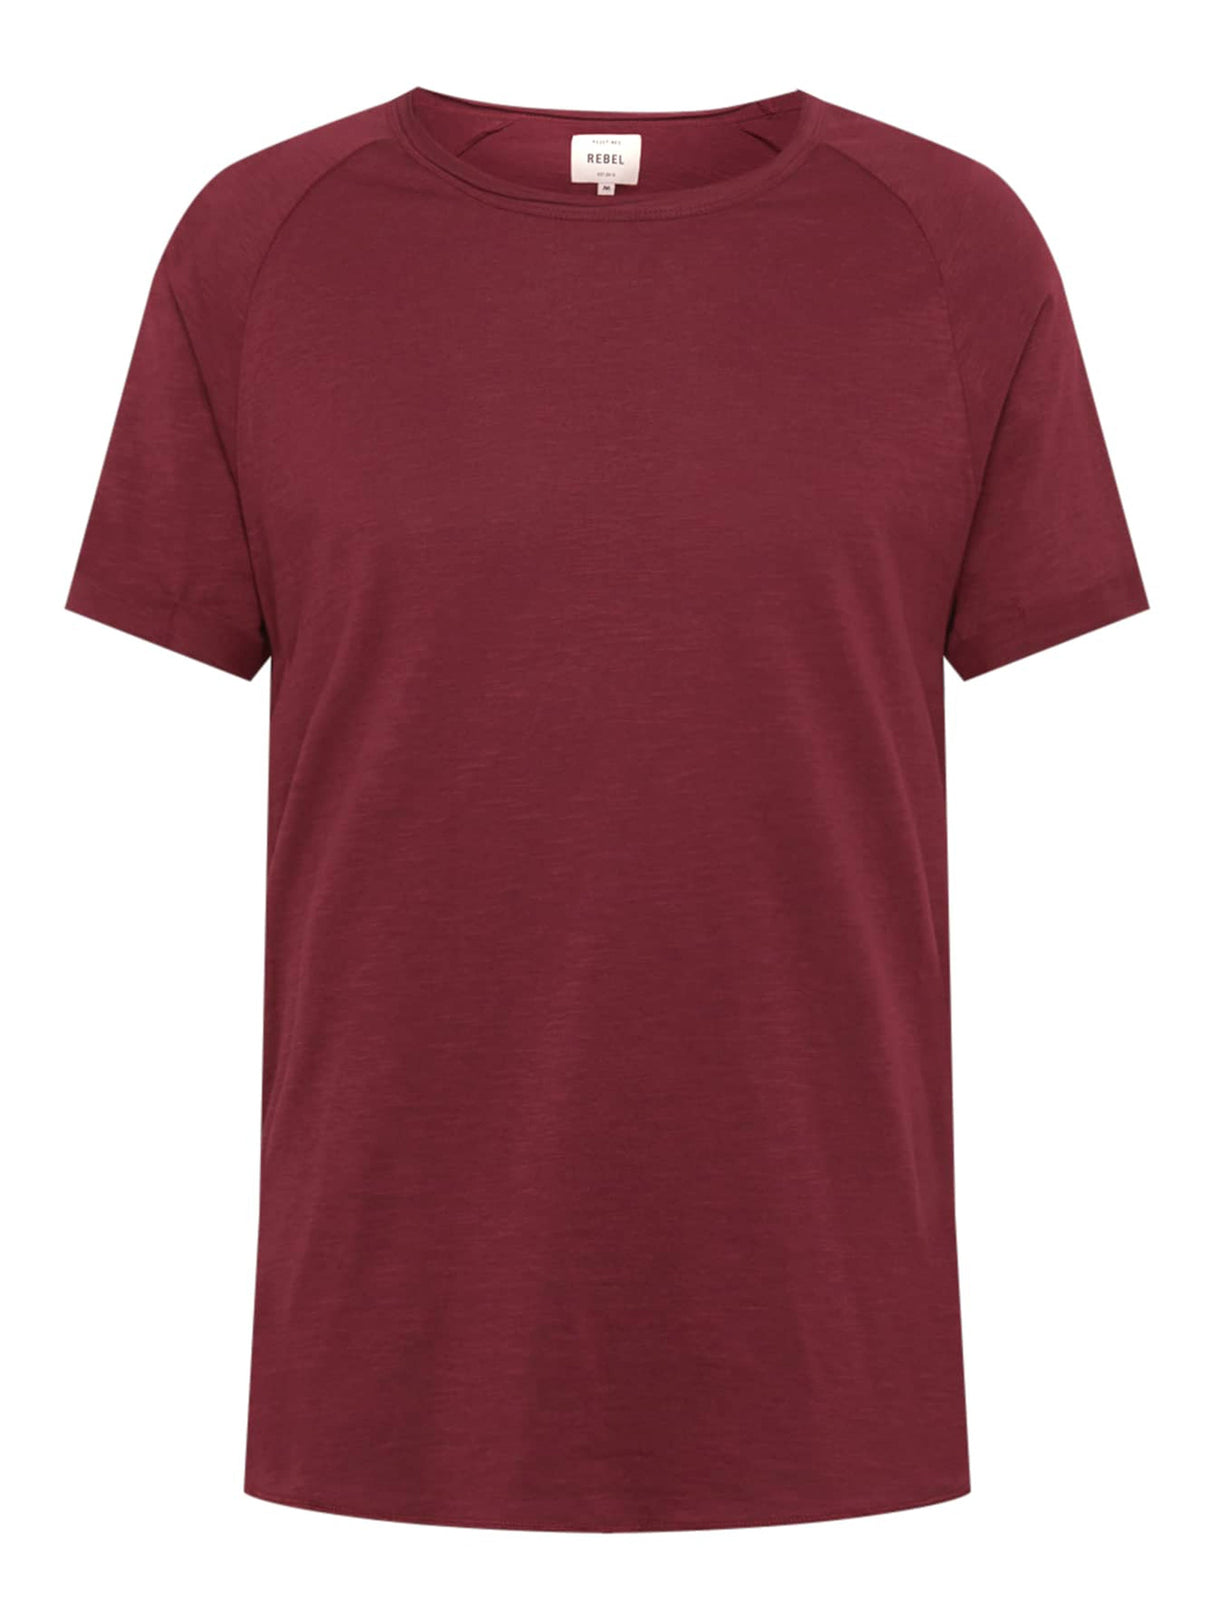 Image for Men's Plain Solid T-Shirt,Burgundy